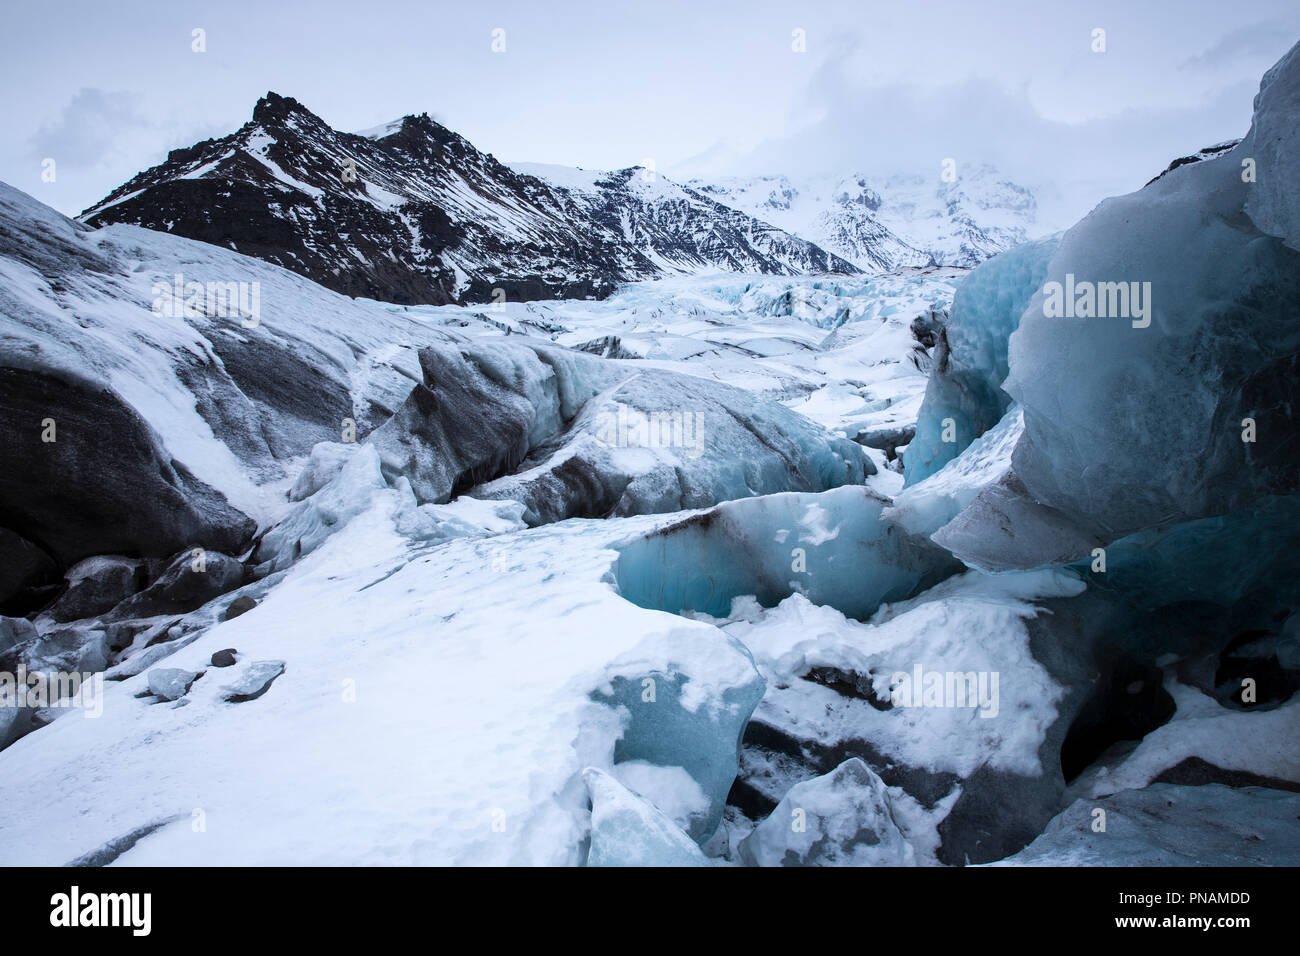 Cerrar mostrando capas de bloques de hielo de los glaciares de la lengua glaciar Svinafellsjokull una salida del glaciar Vatnajokull, en el sur de Islandia Foto de stock